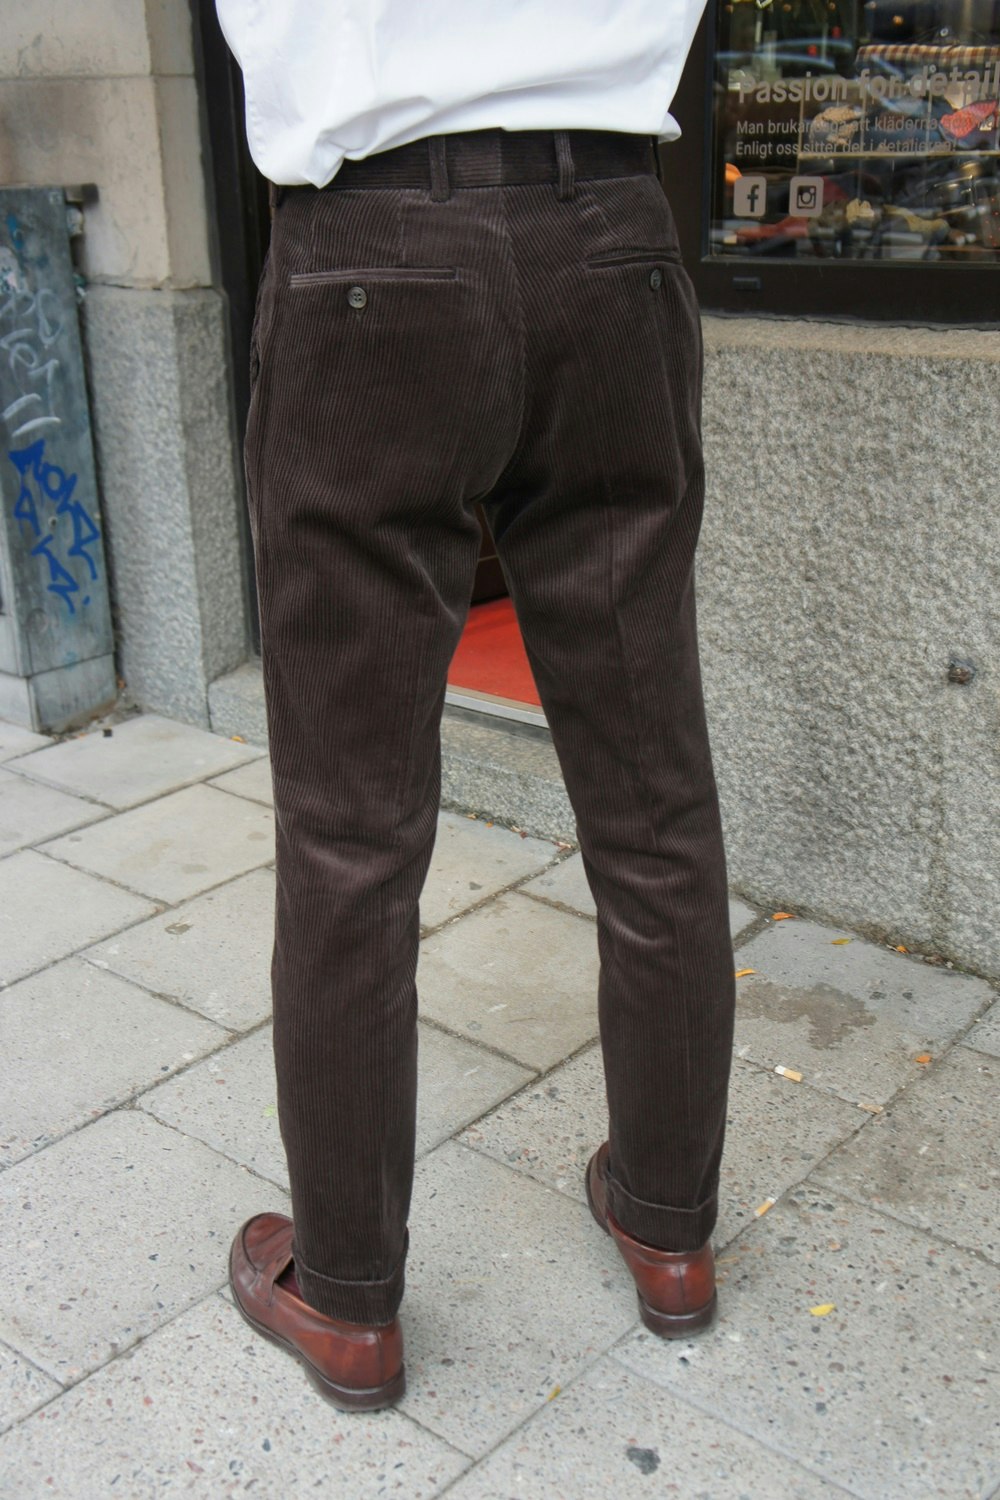 Solid High Waist Corduroy Trousers - Dark Brown